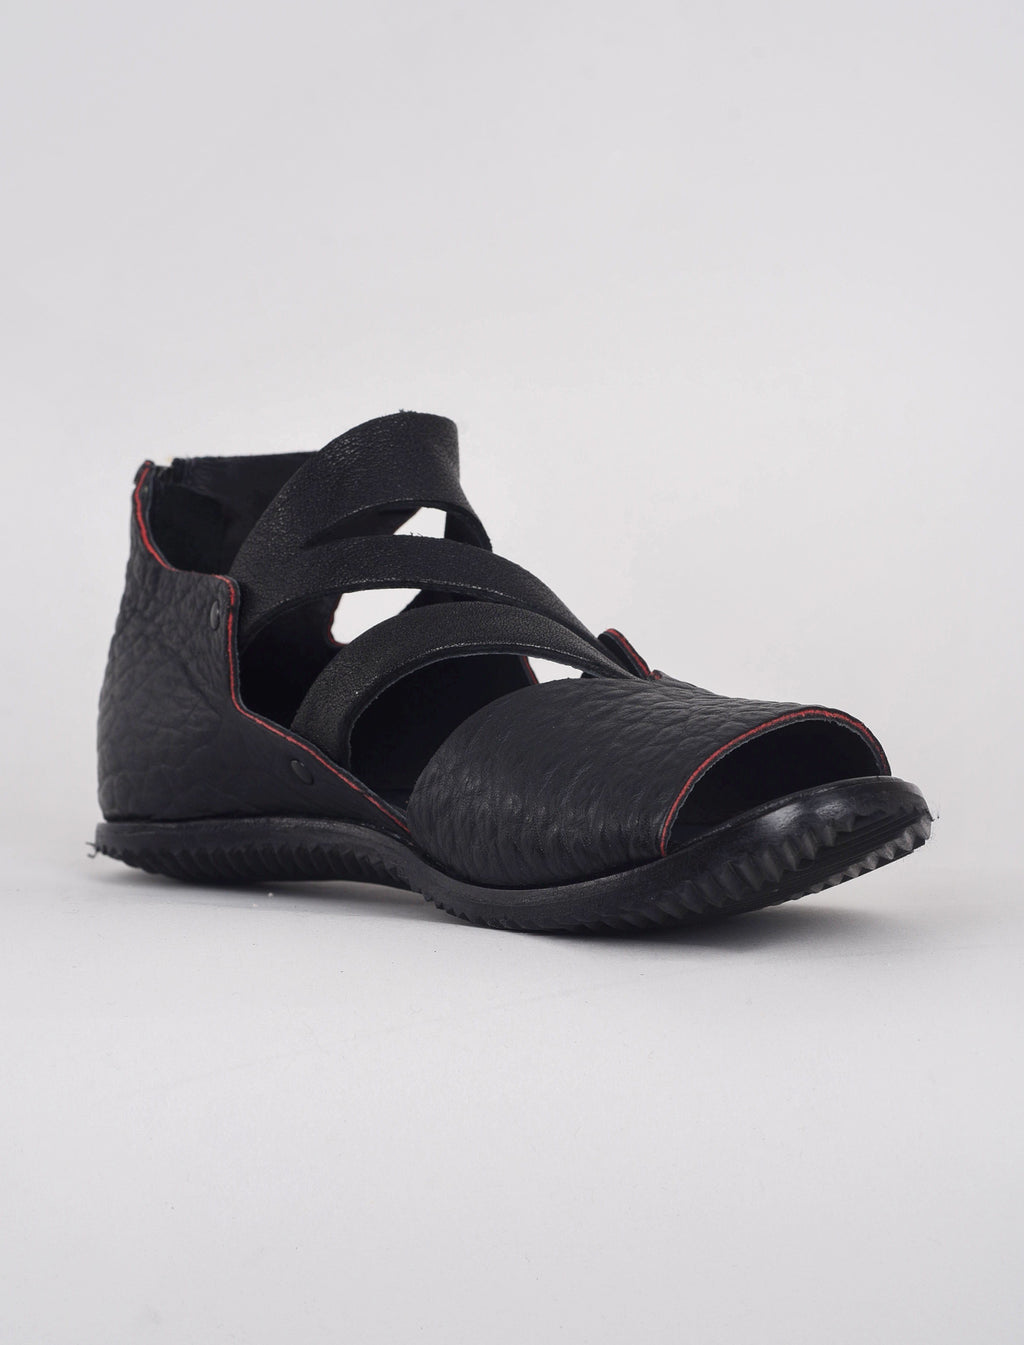 Cydwoq Teton Sandals, Black/Red 